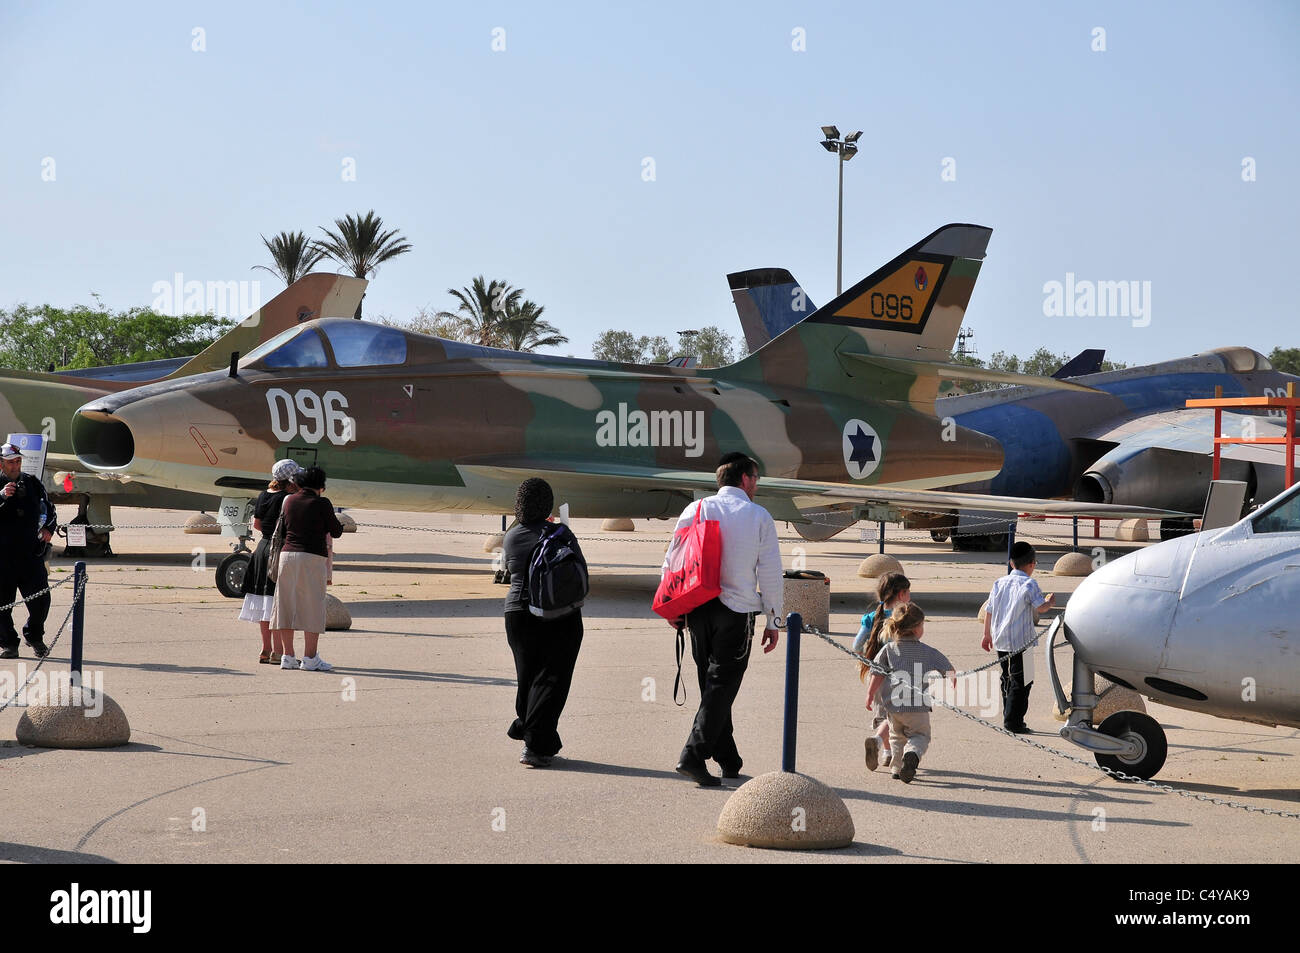 Israel, Hazirim, near Beer Sheva, Israeli Air Force museum. The national centre for Israel's aviation heritage. Stock Photo